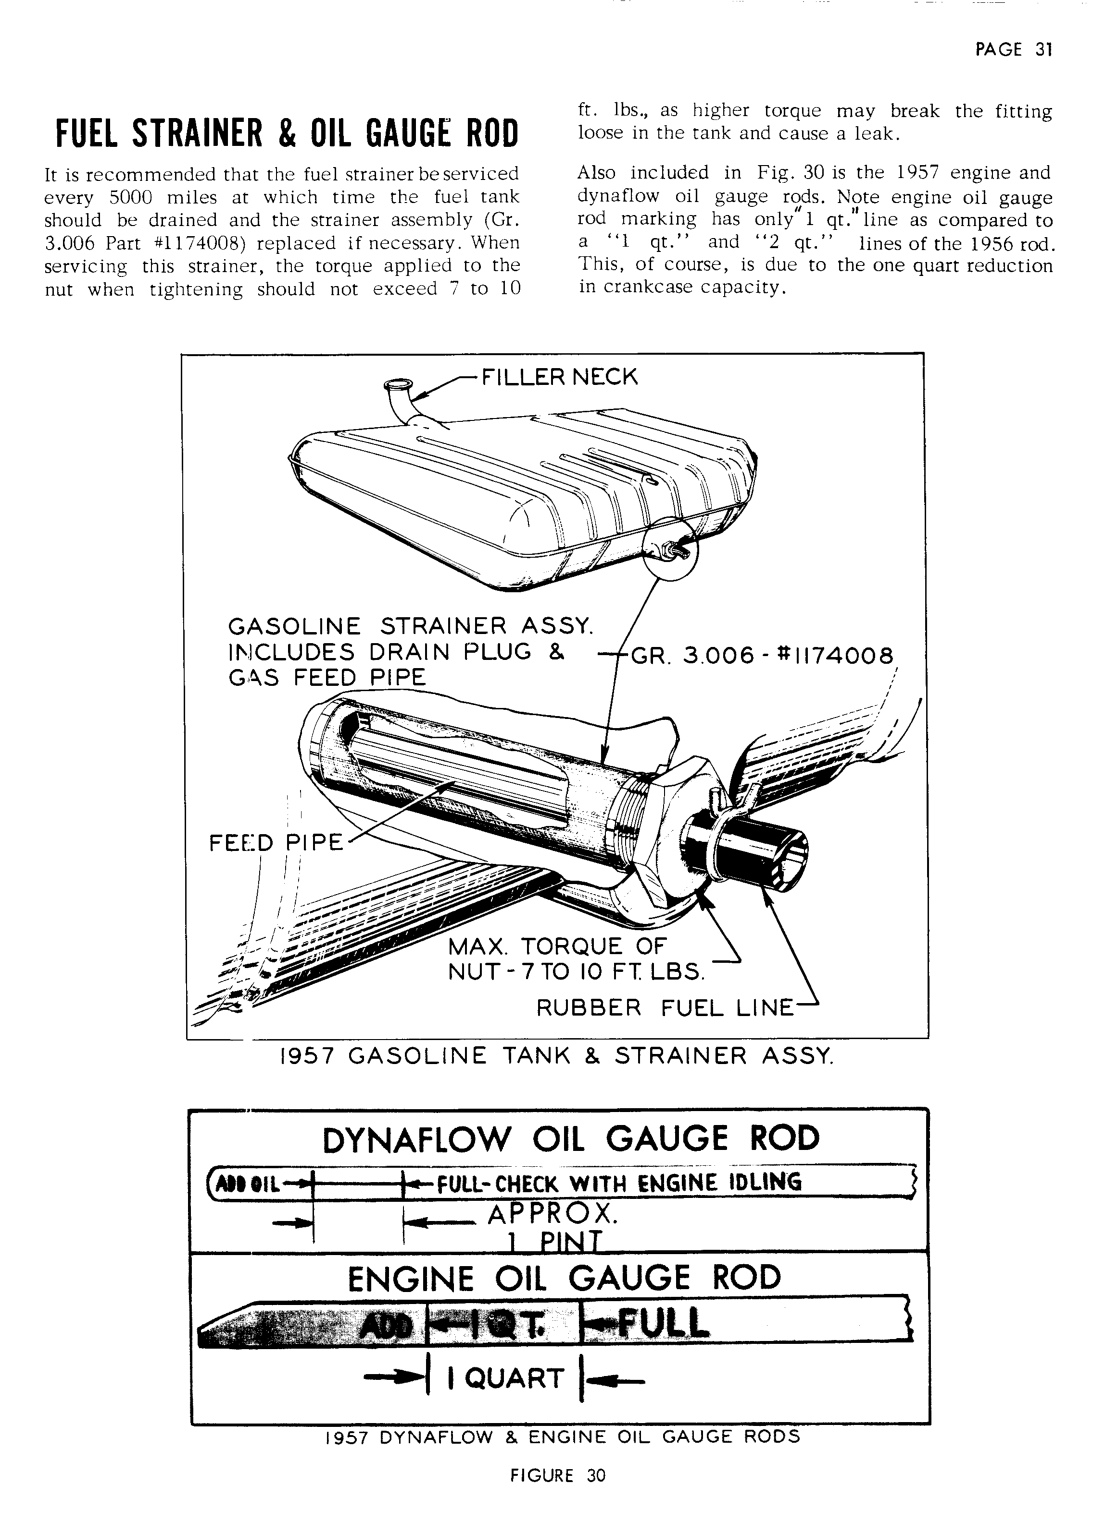 n_1957 Buick Product Service  Bulletins-037-037.jpg